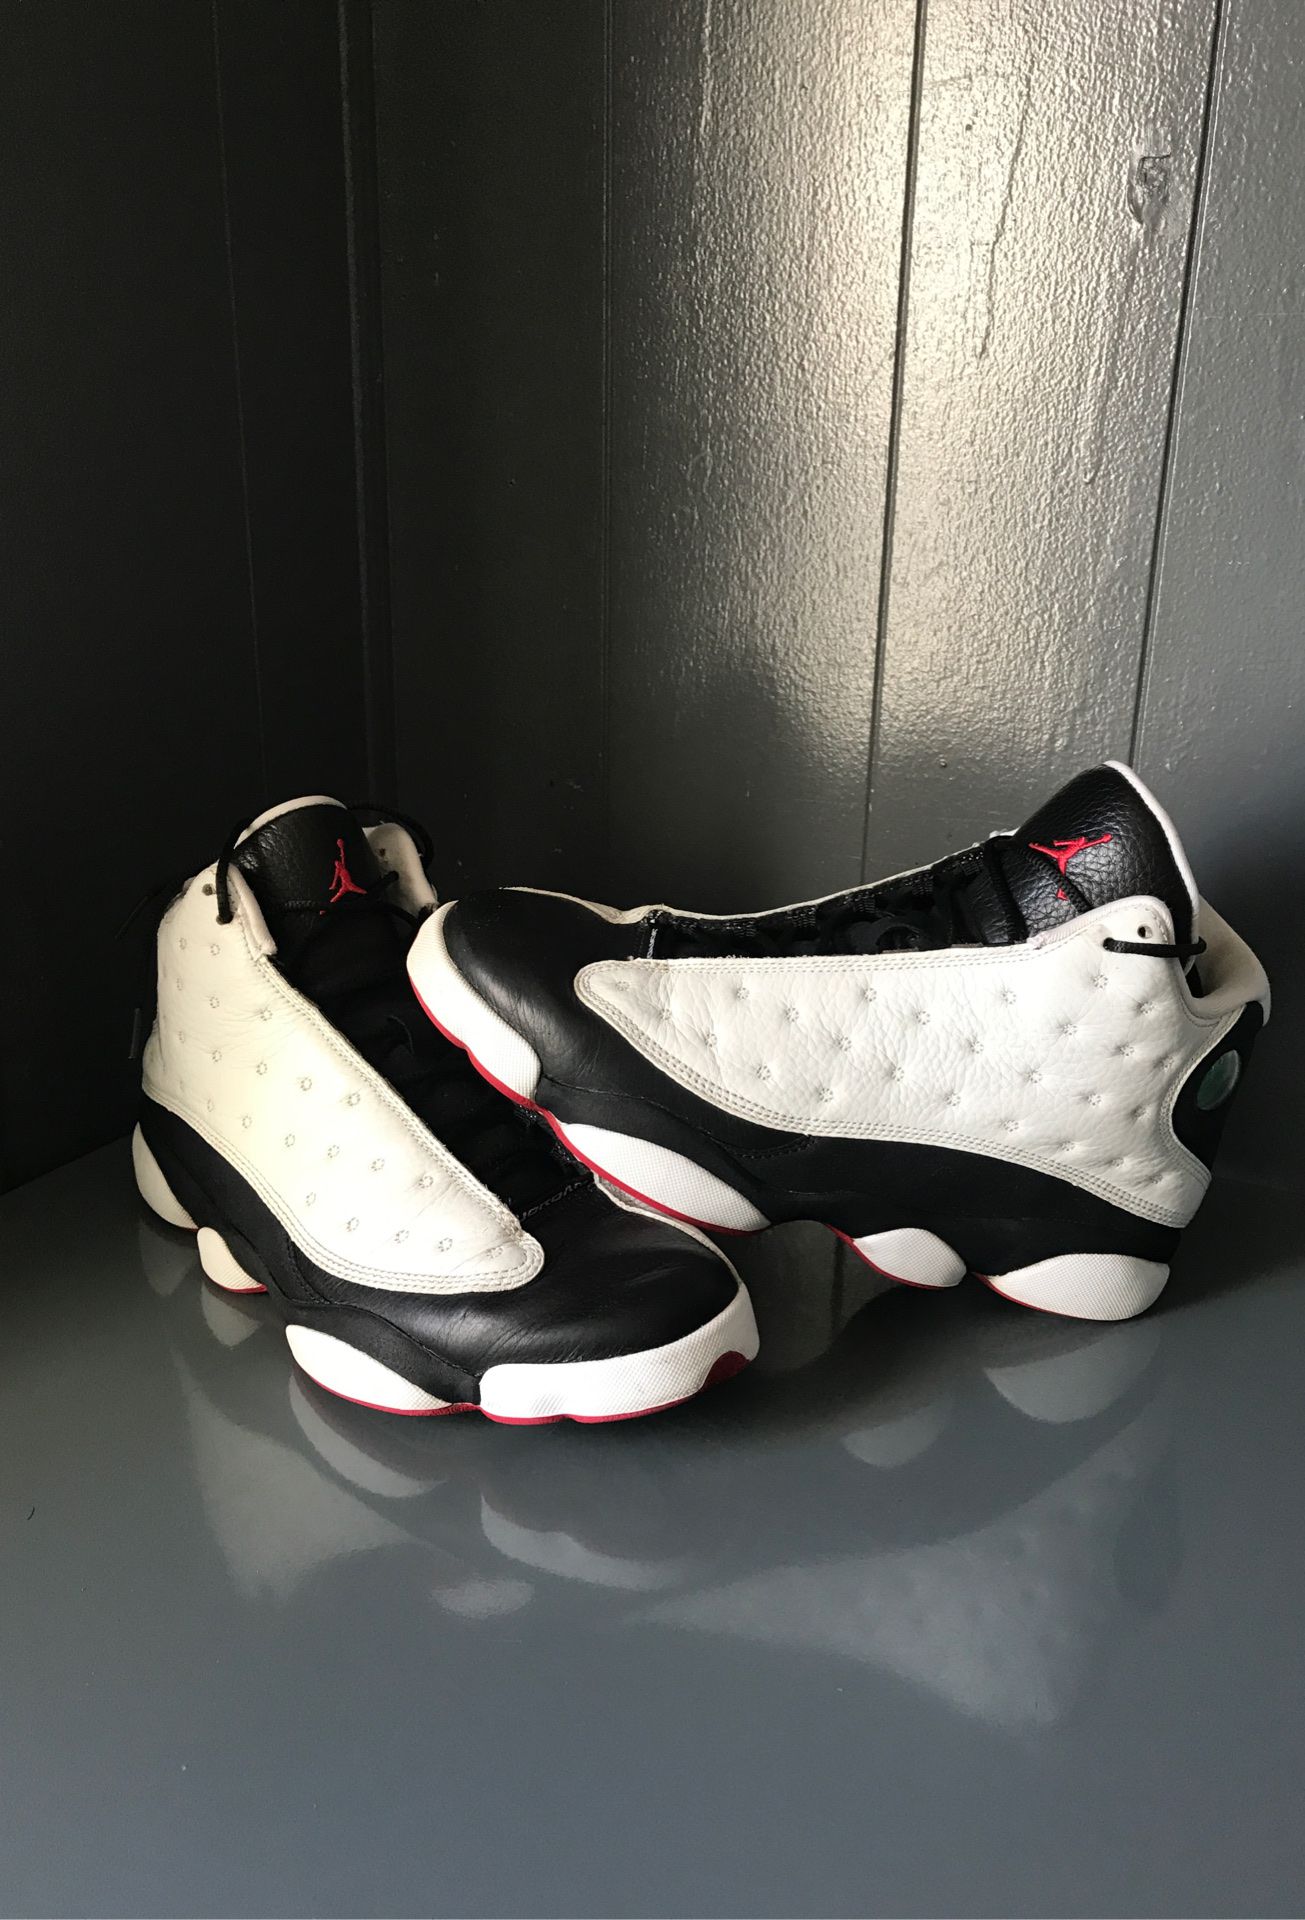 Air Jordan Retro 13 XIII “He Got Game” Size 11